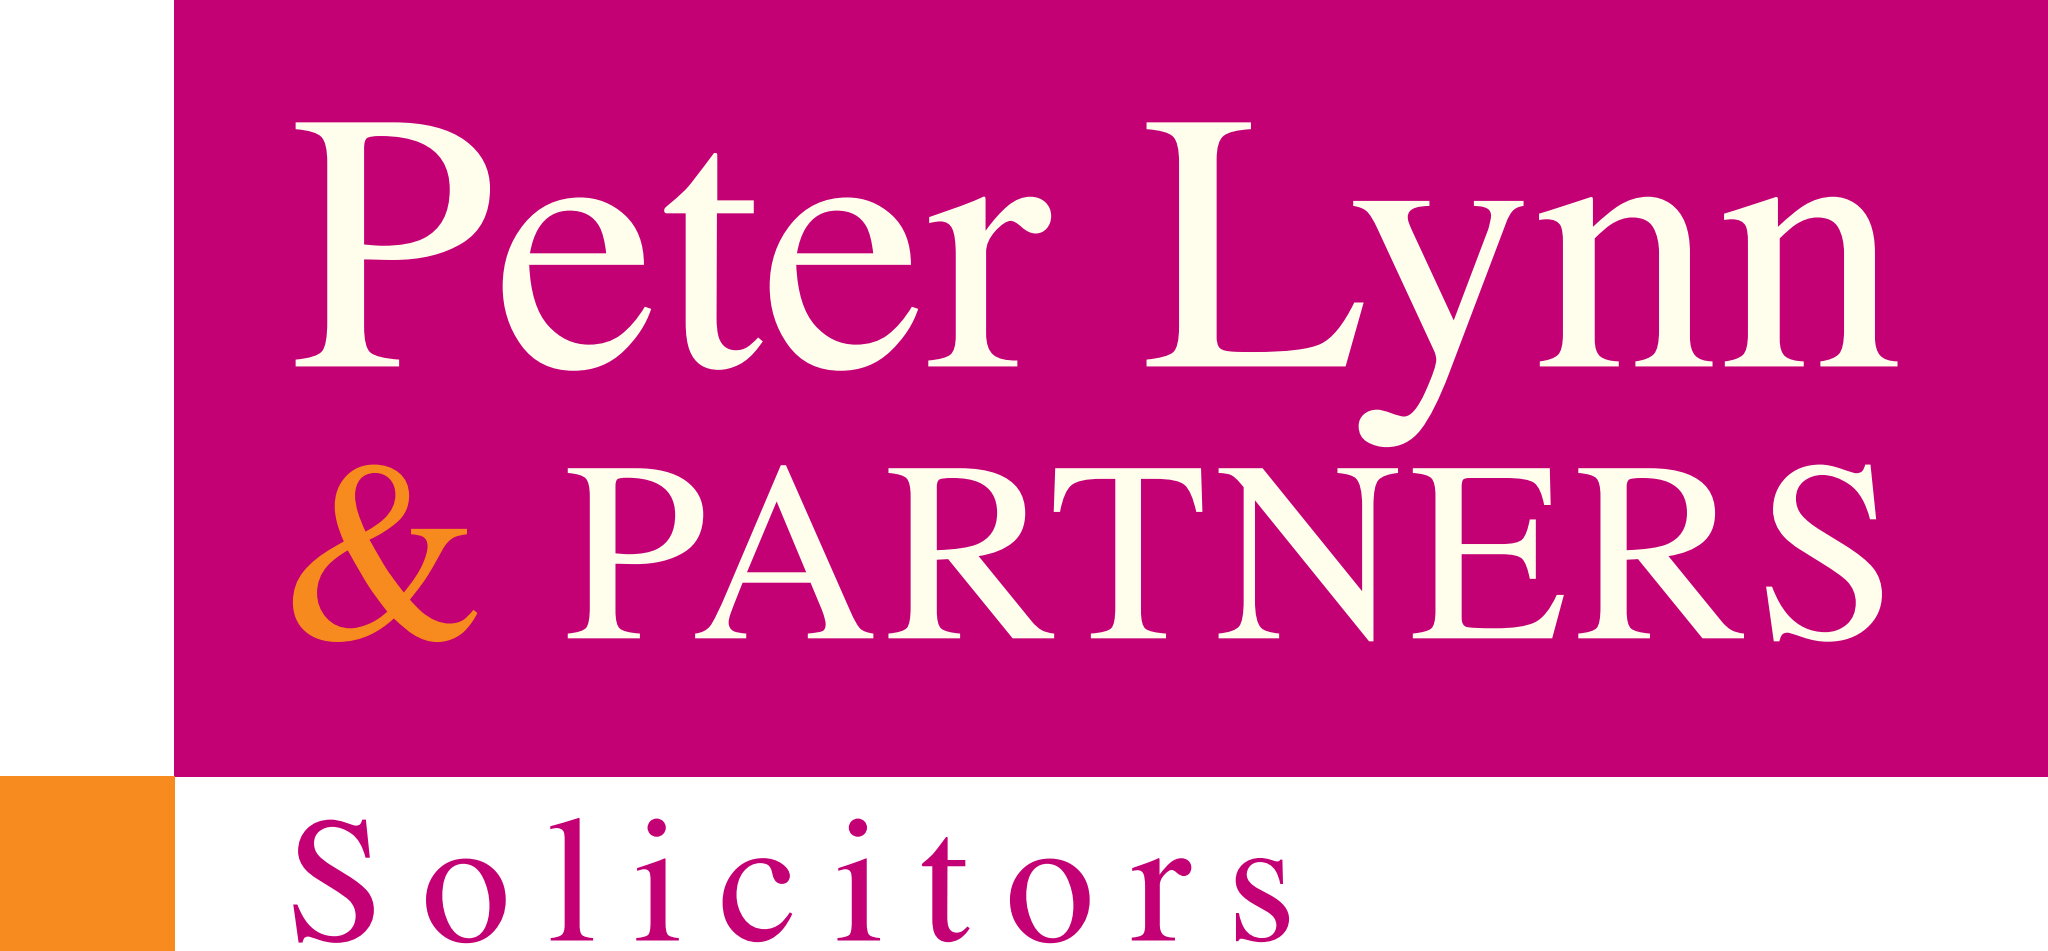 Peter Lynn & Partners